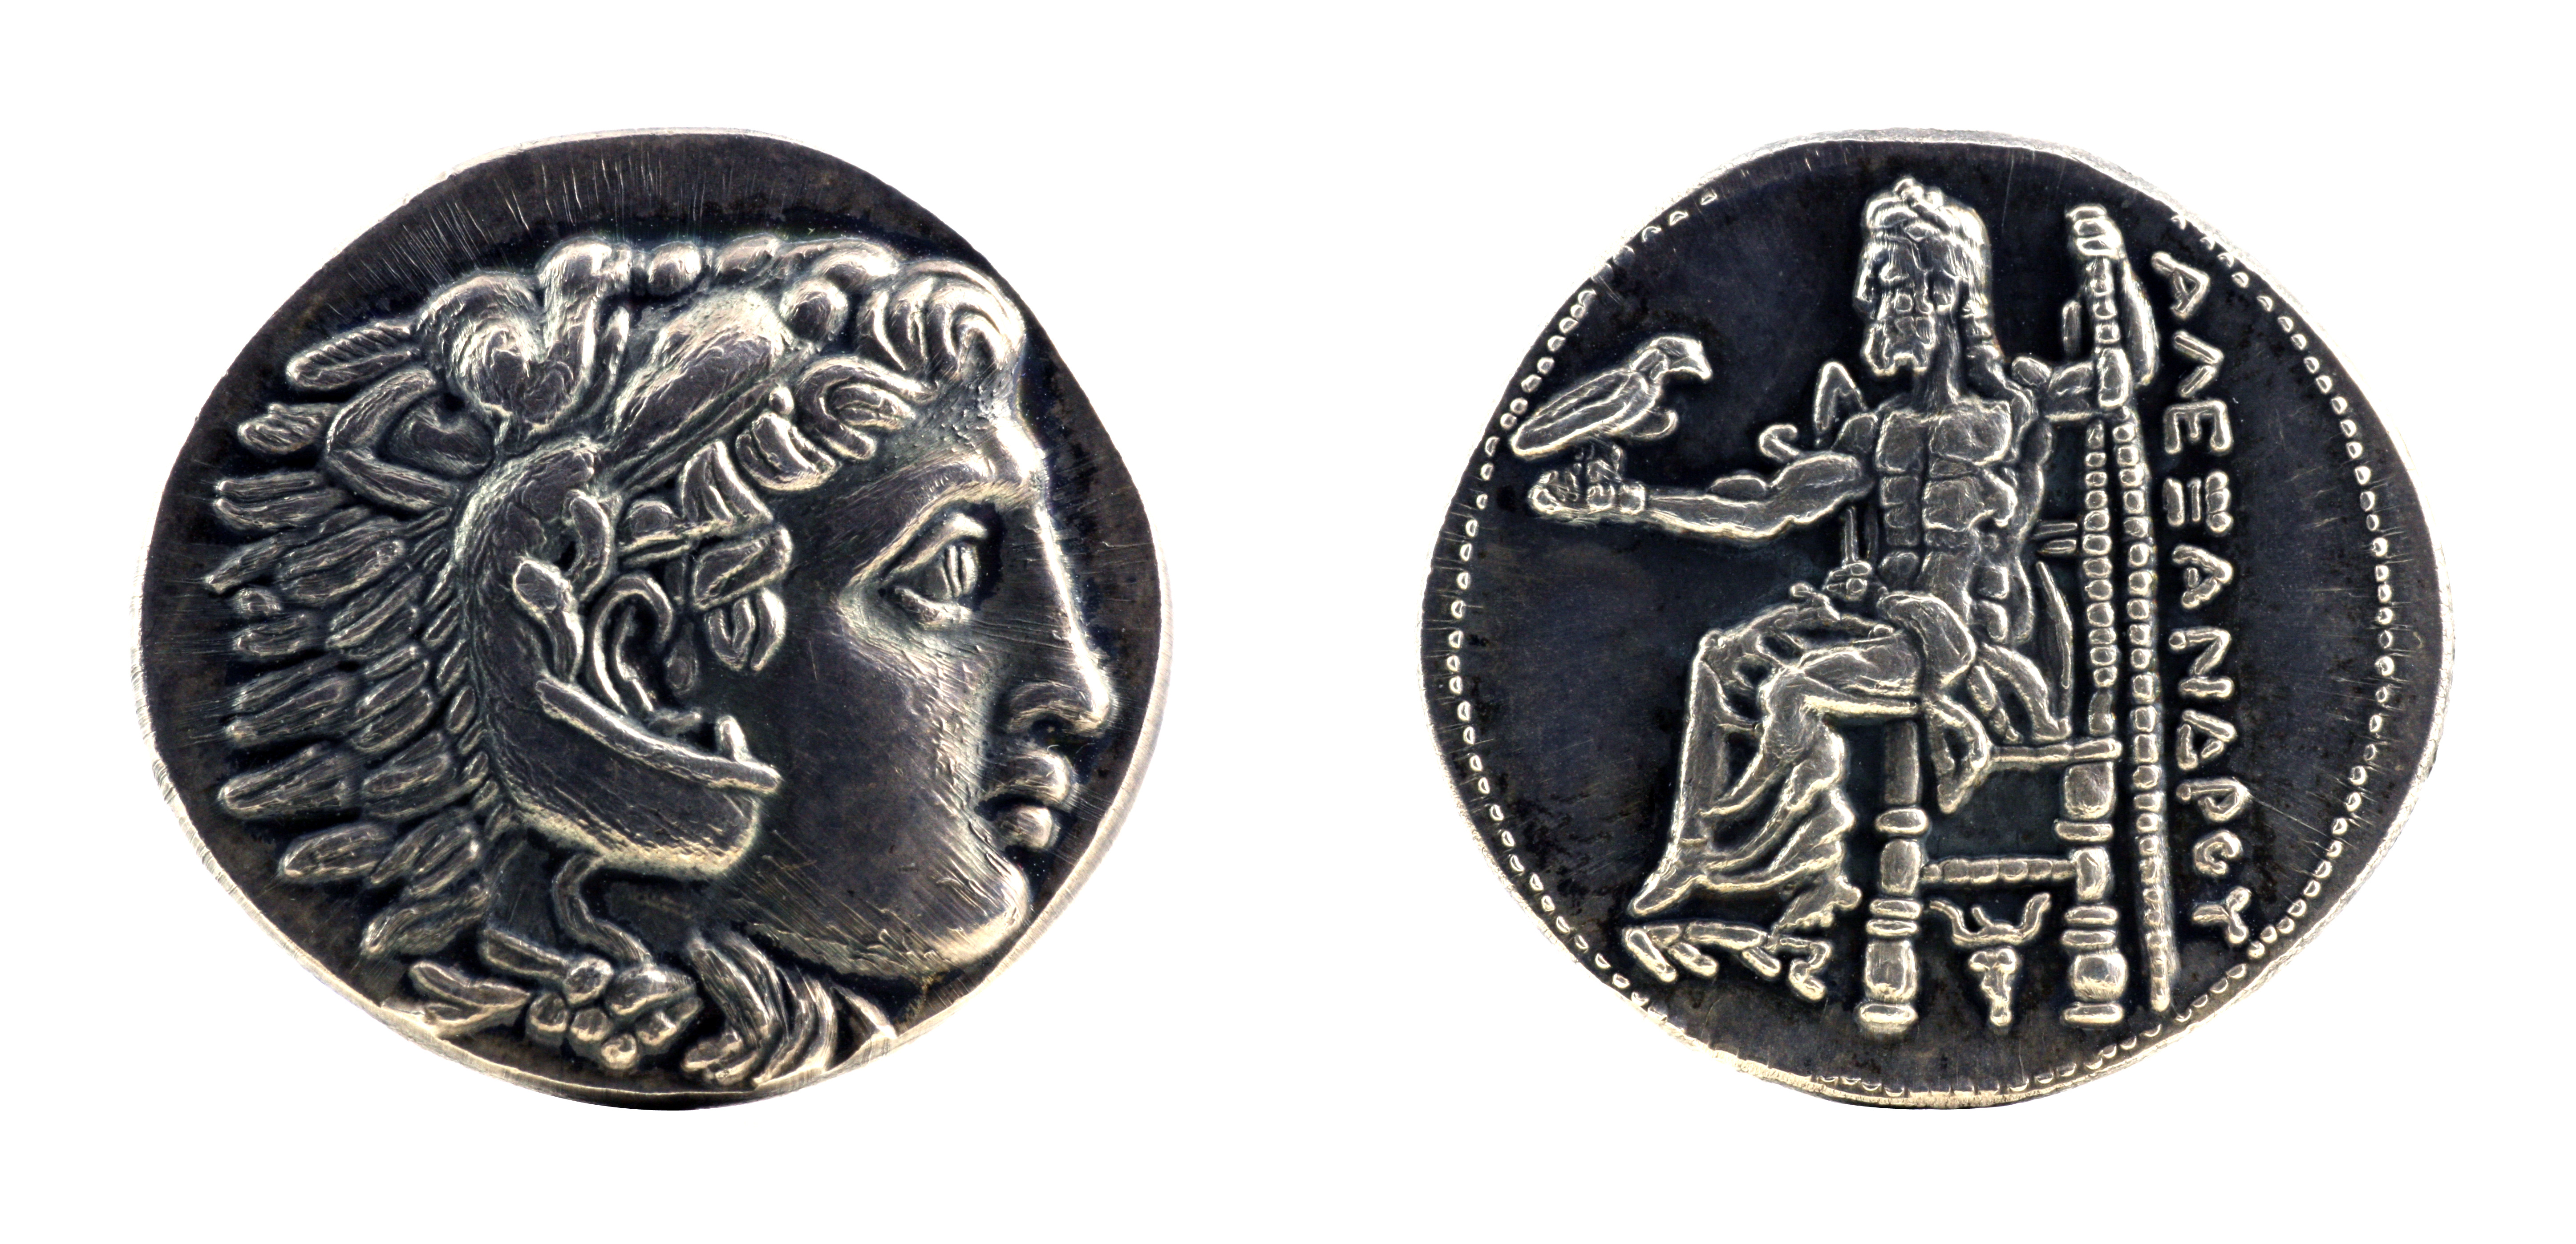 Tetradrachm from era of Alexander the Great. Image courtesy Adobe Stock.